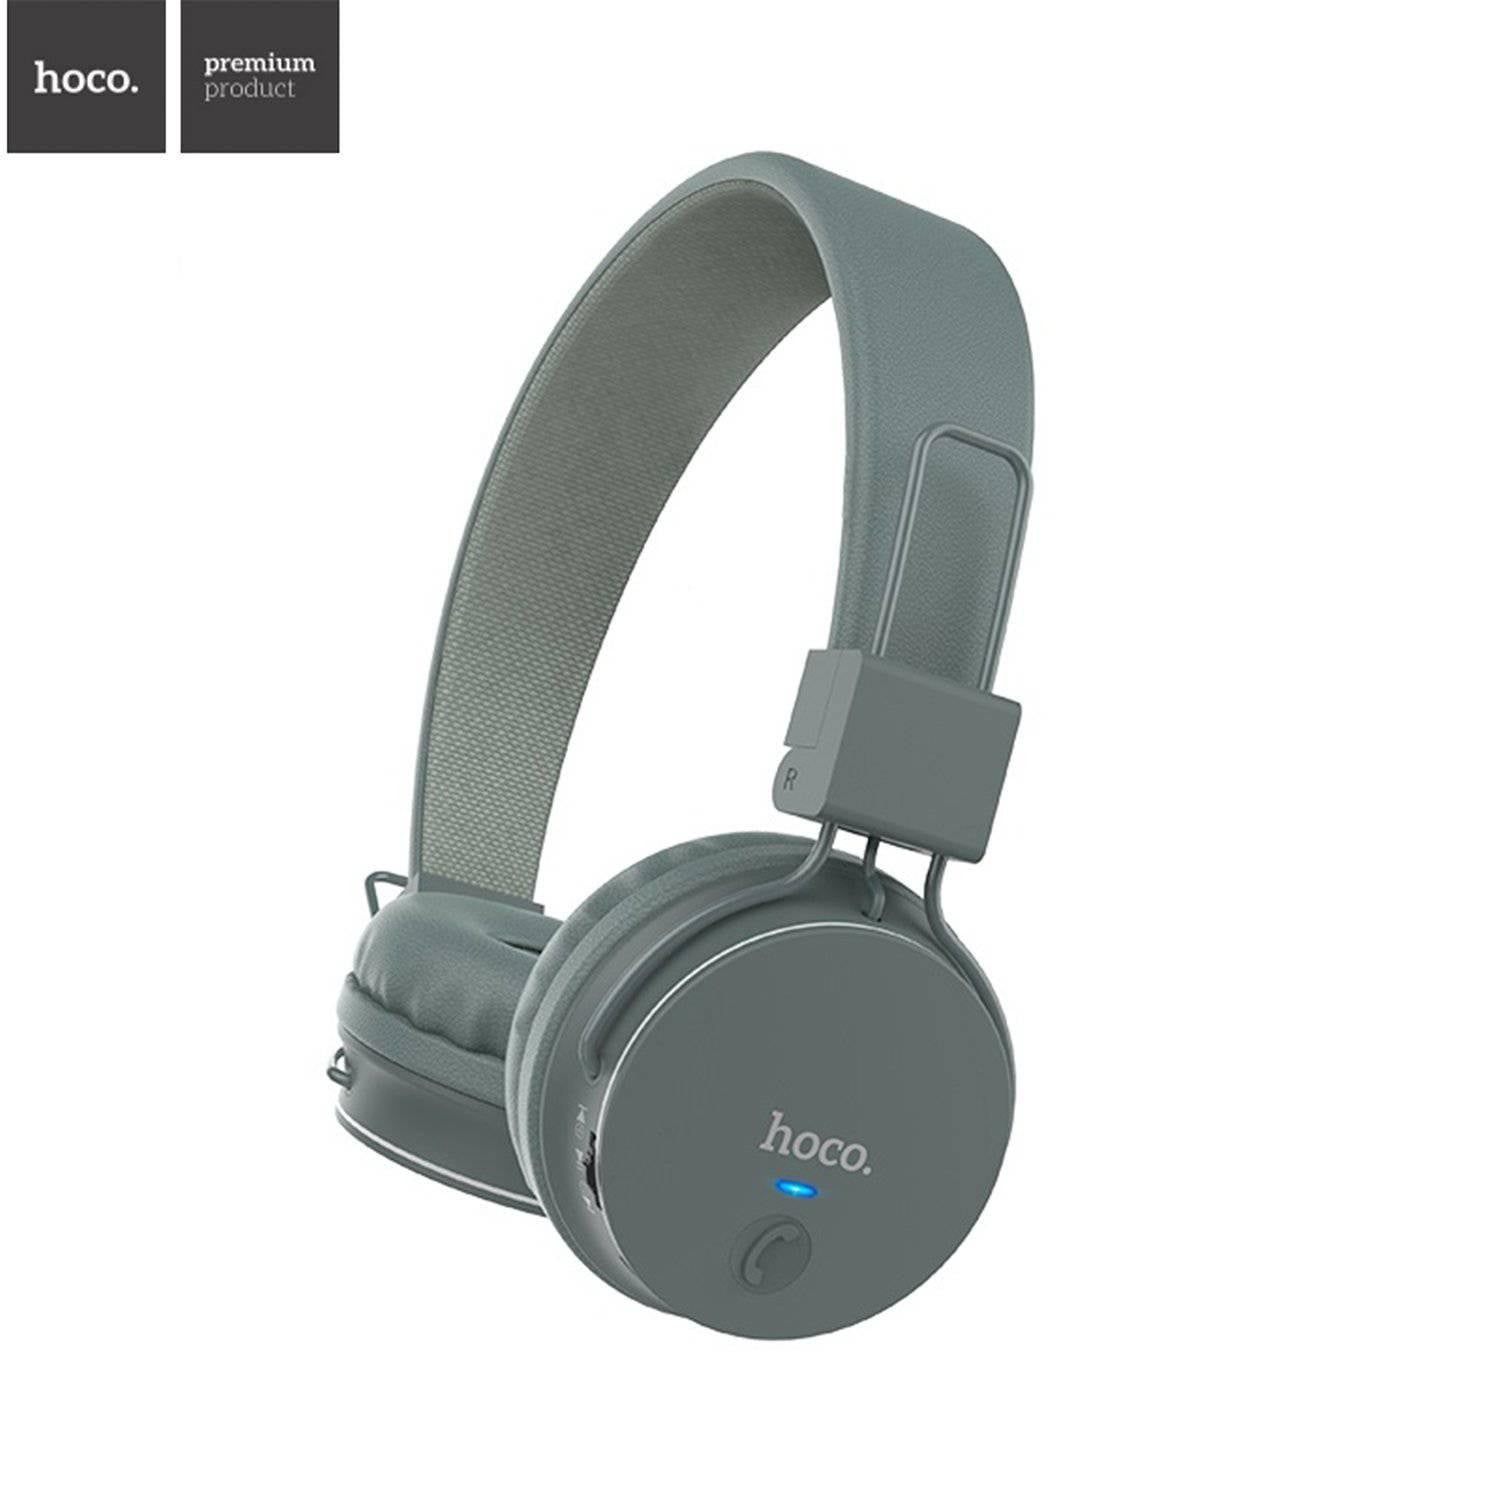 hoco. Headphones “W19 Easy move” wireless and wired telescopic head beam | Shopna Online Store .